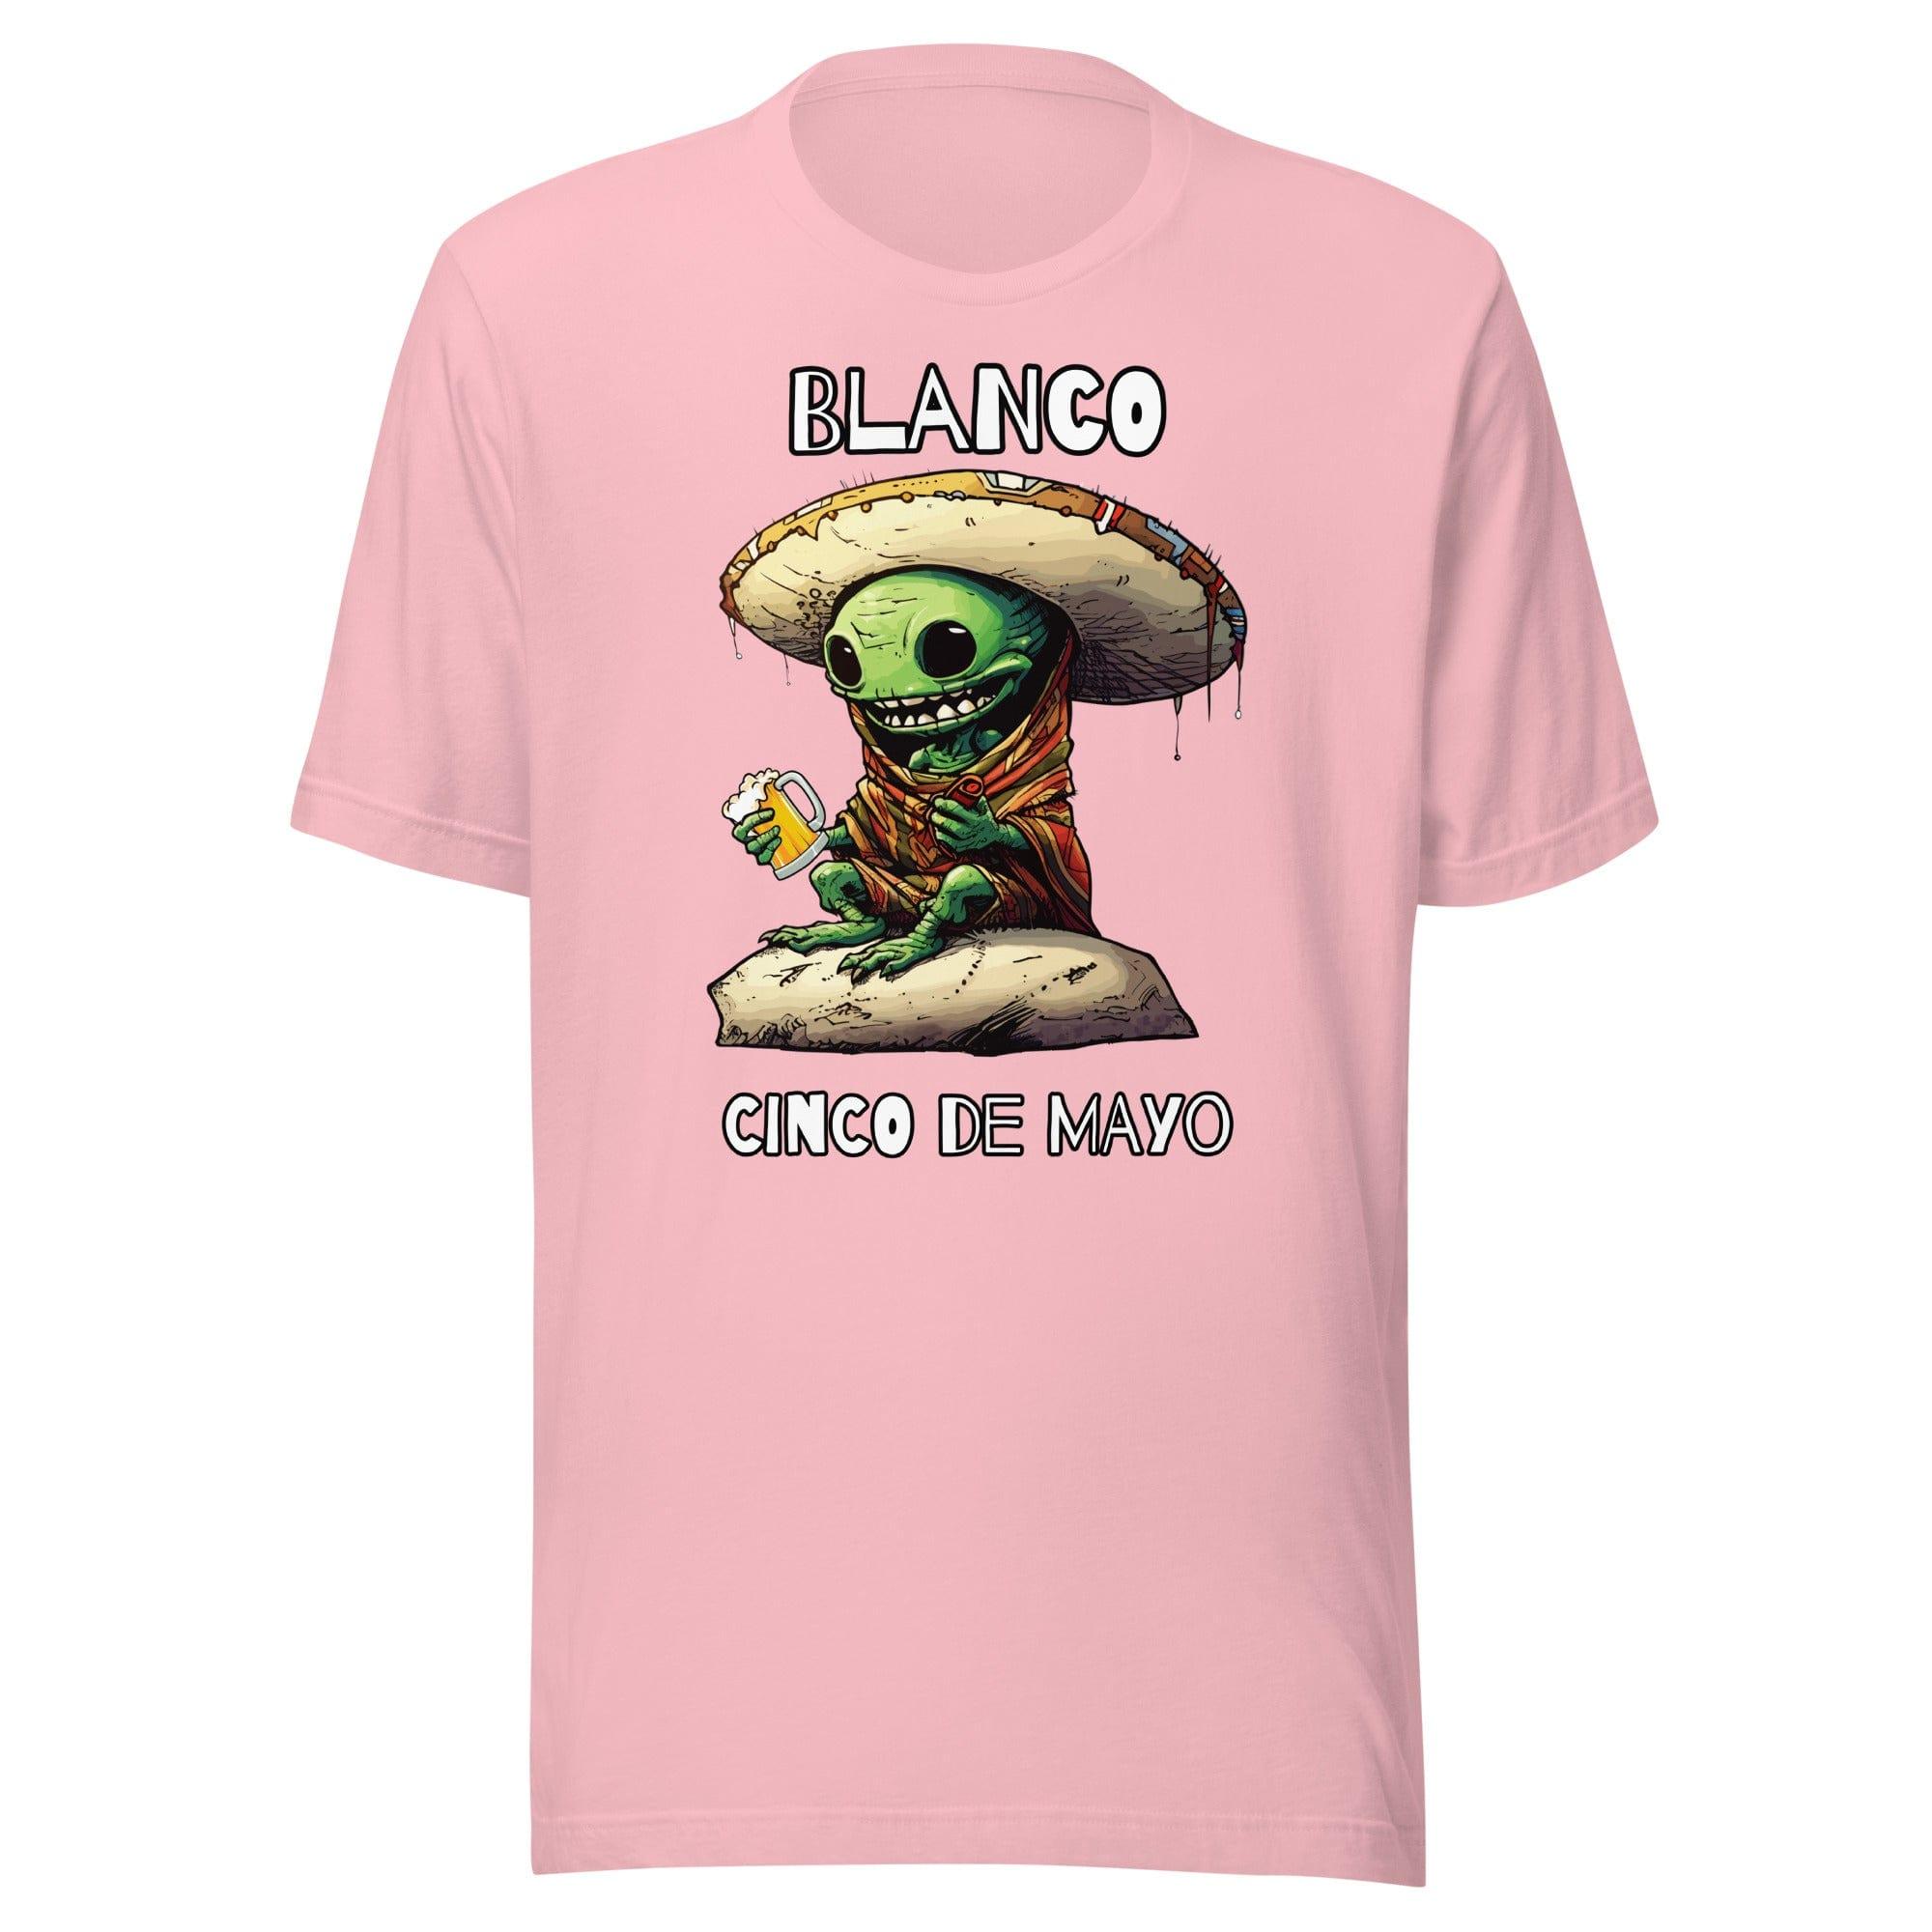 Tequila T-shirt Blanco Alien Sombrero Series Unisex Top - TopKoalaTee